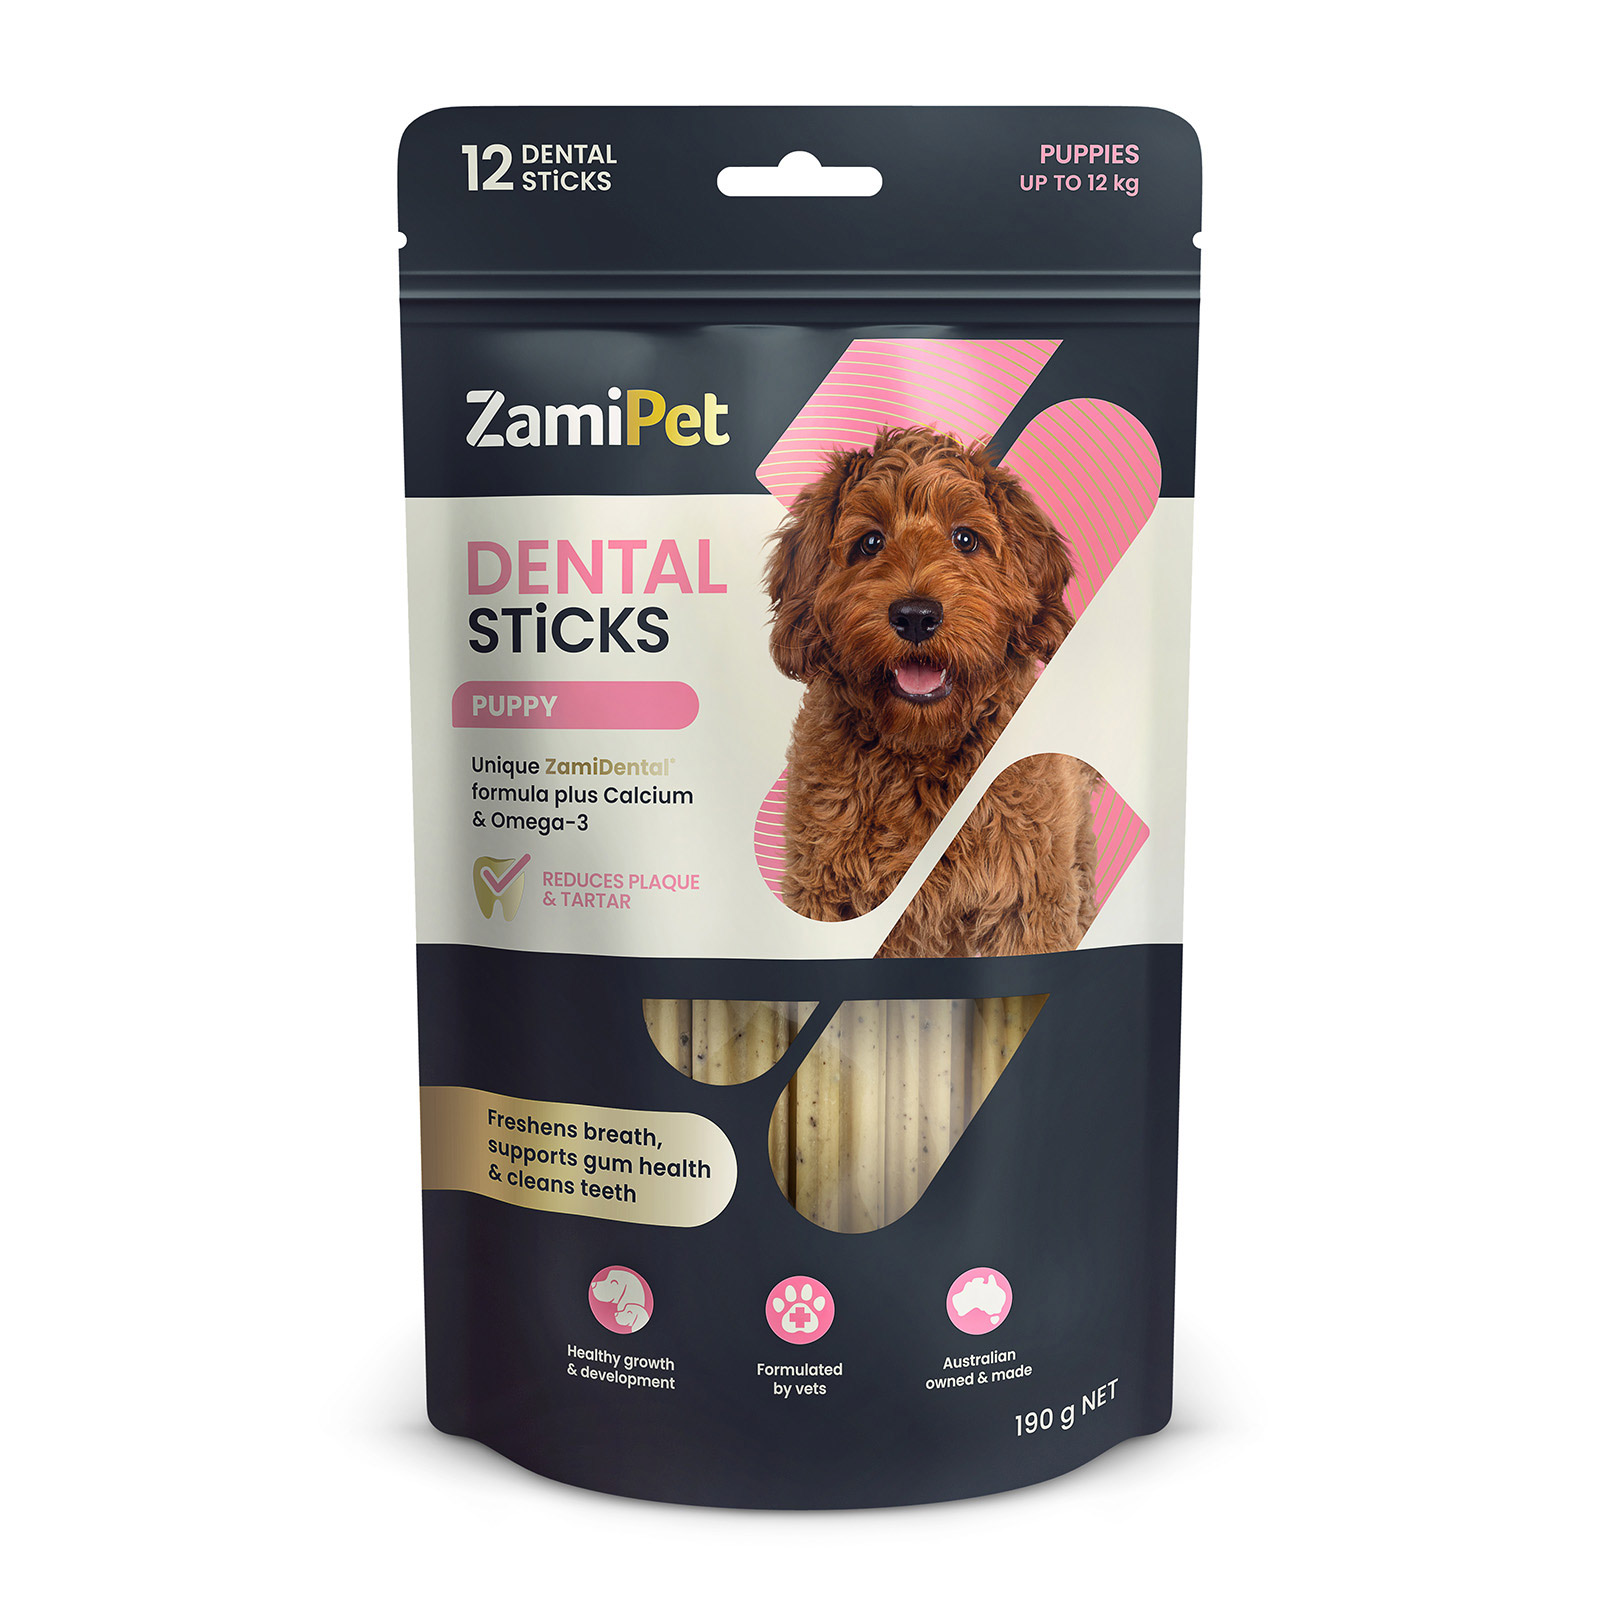 ZamiPet Dental Sticks Puppy Dog Treats for Dogs